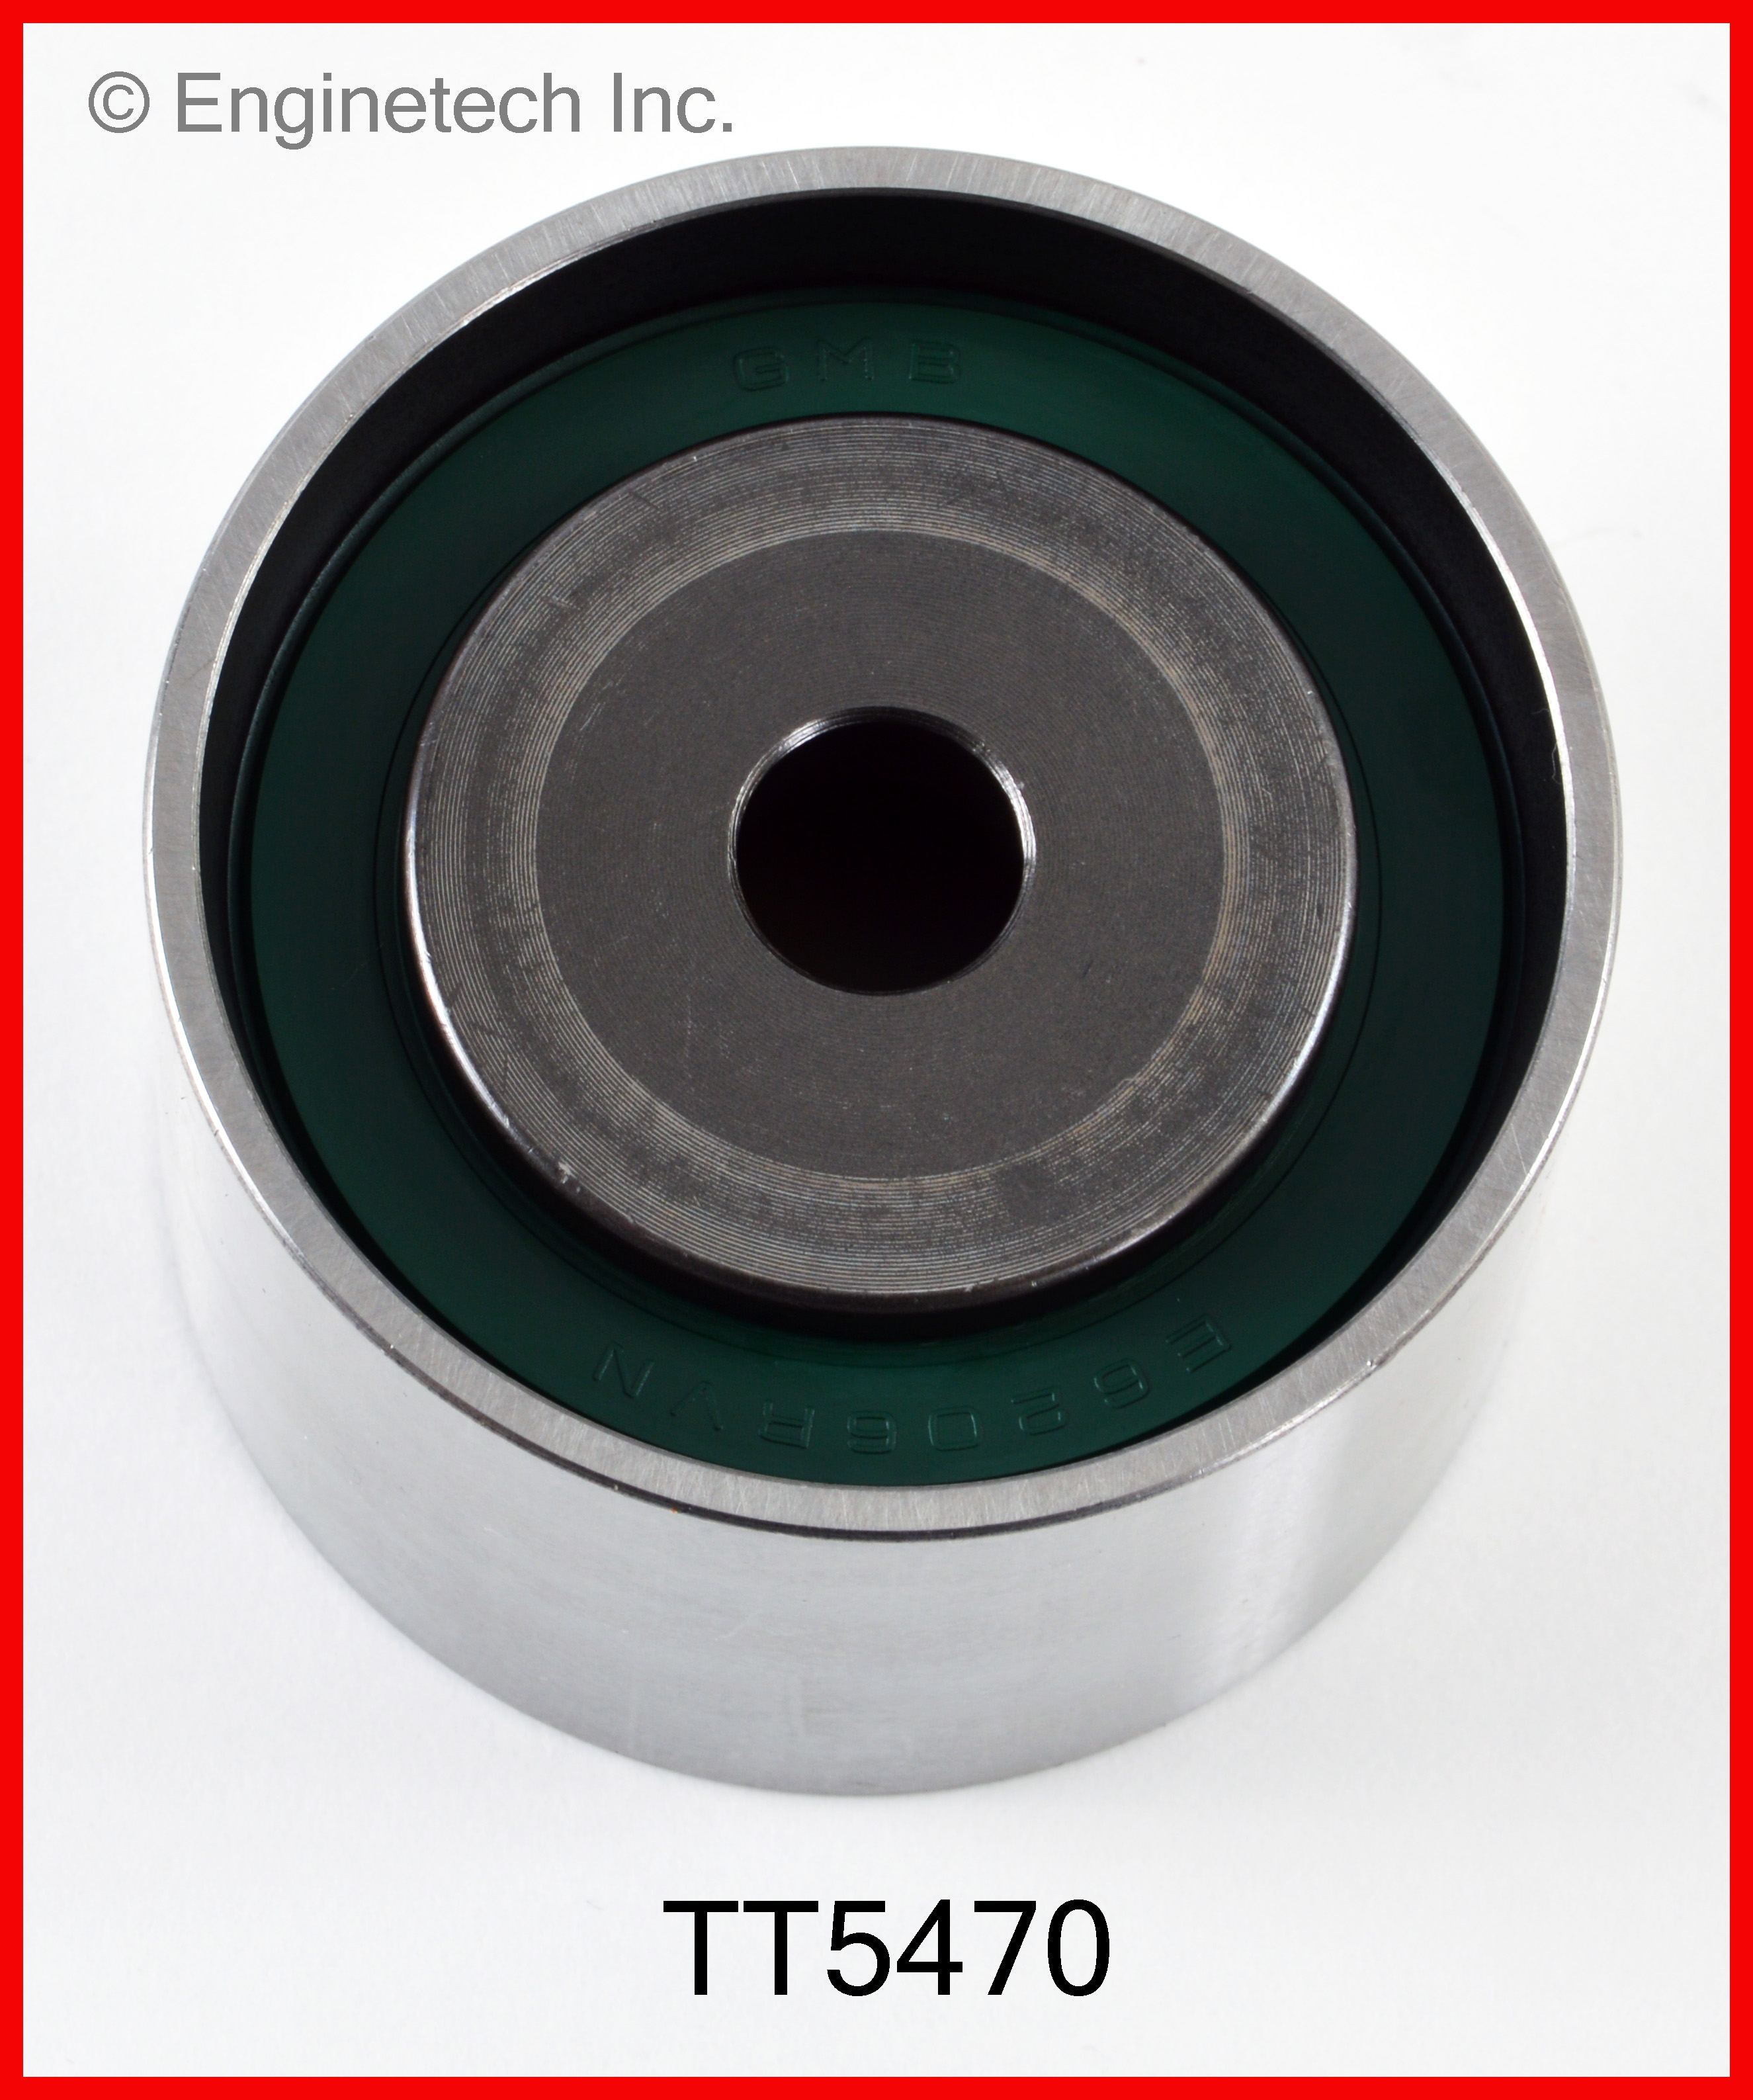 TT5470 Timing Belt Idler Enginetech